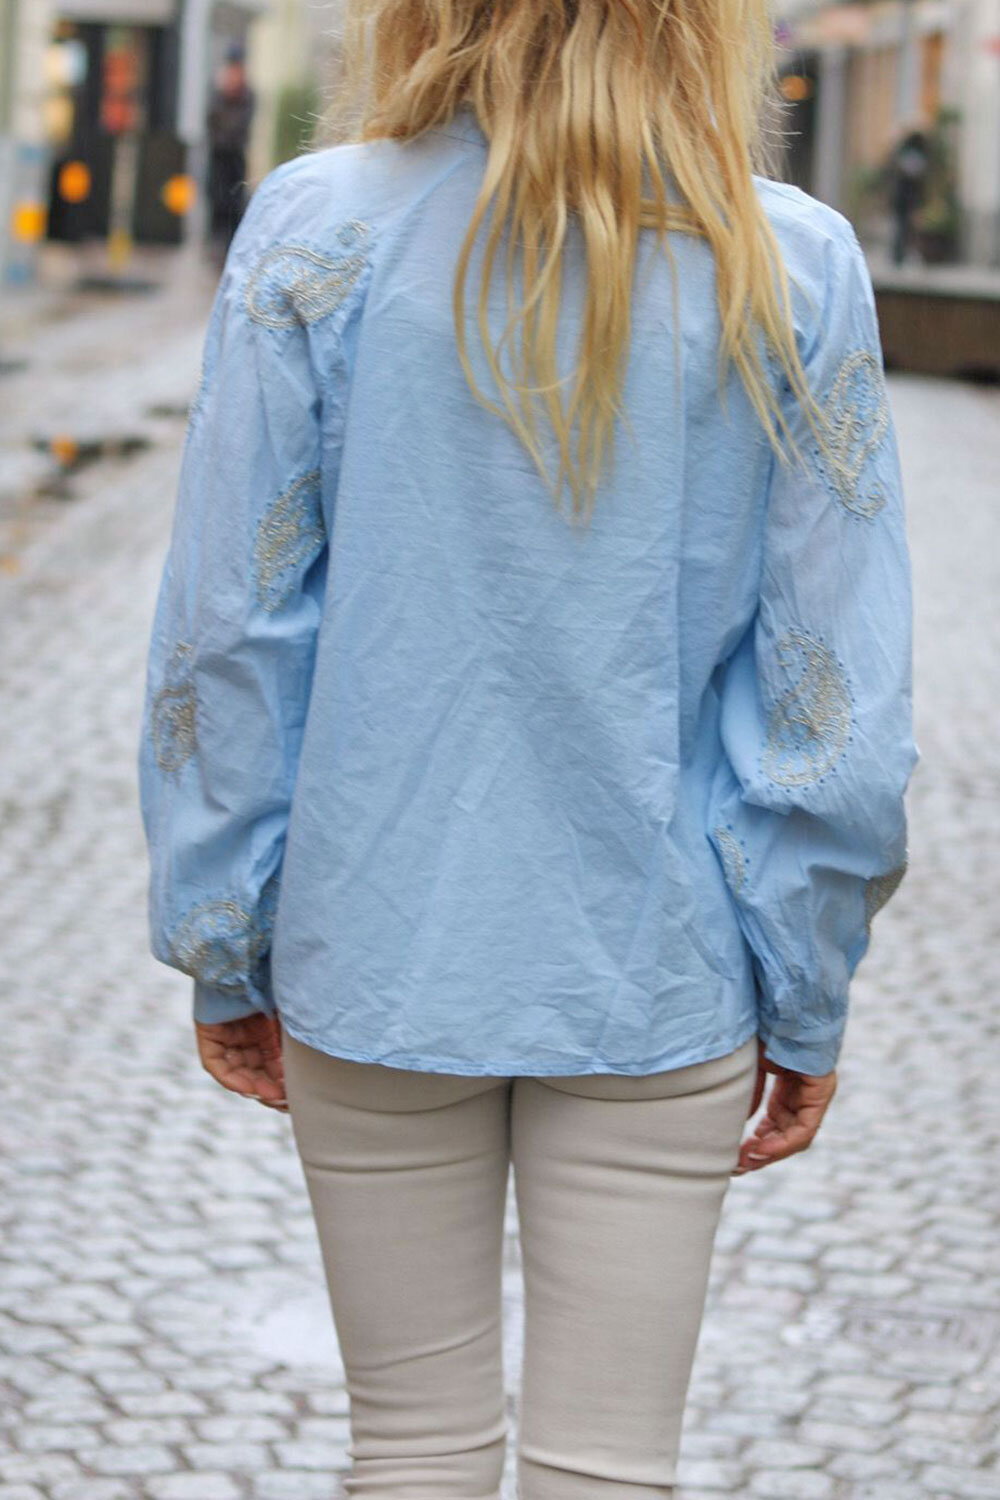 Elisabeth Cotton blouse - Gold embroidery - Light blue